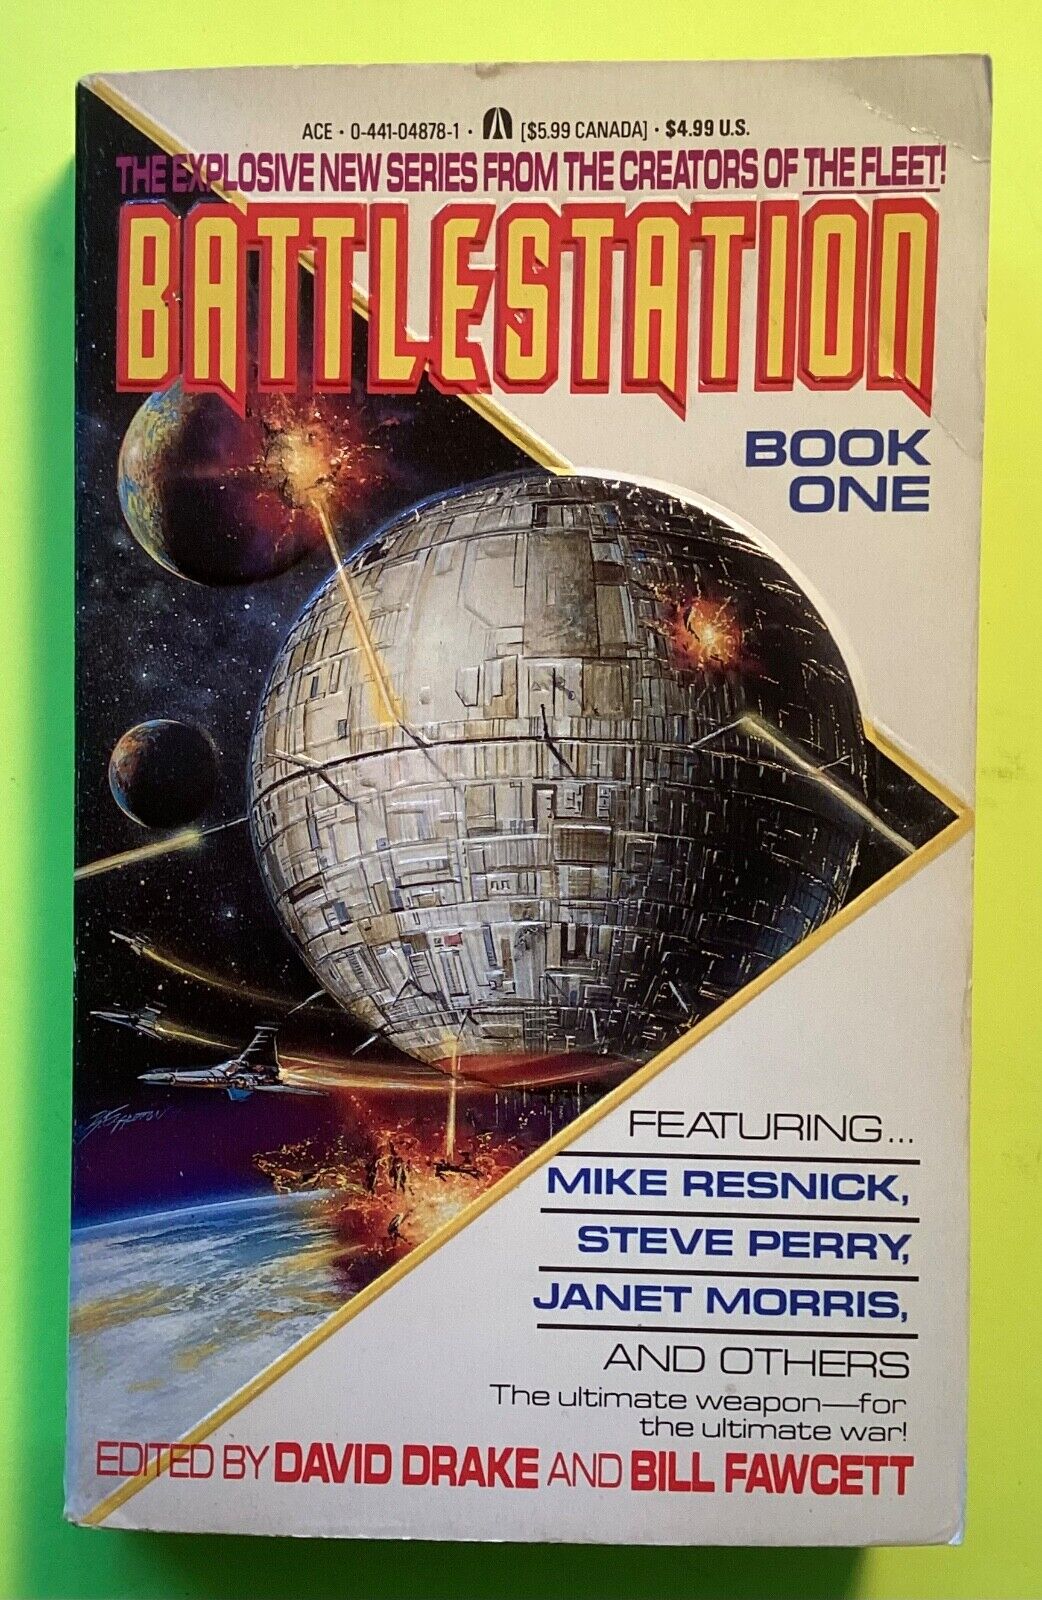 Battlestation Book 1 Paperback series David Drake 1992 SF sci-fi 1st ed Ace book